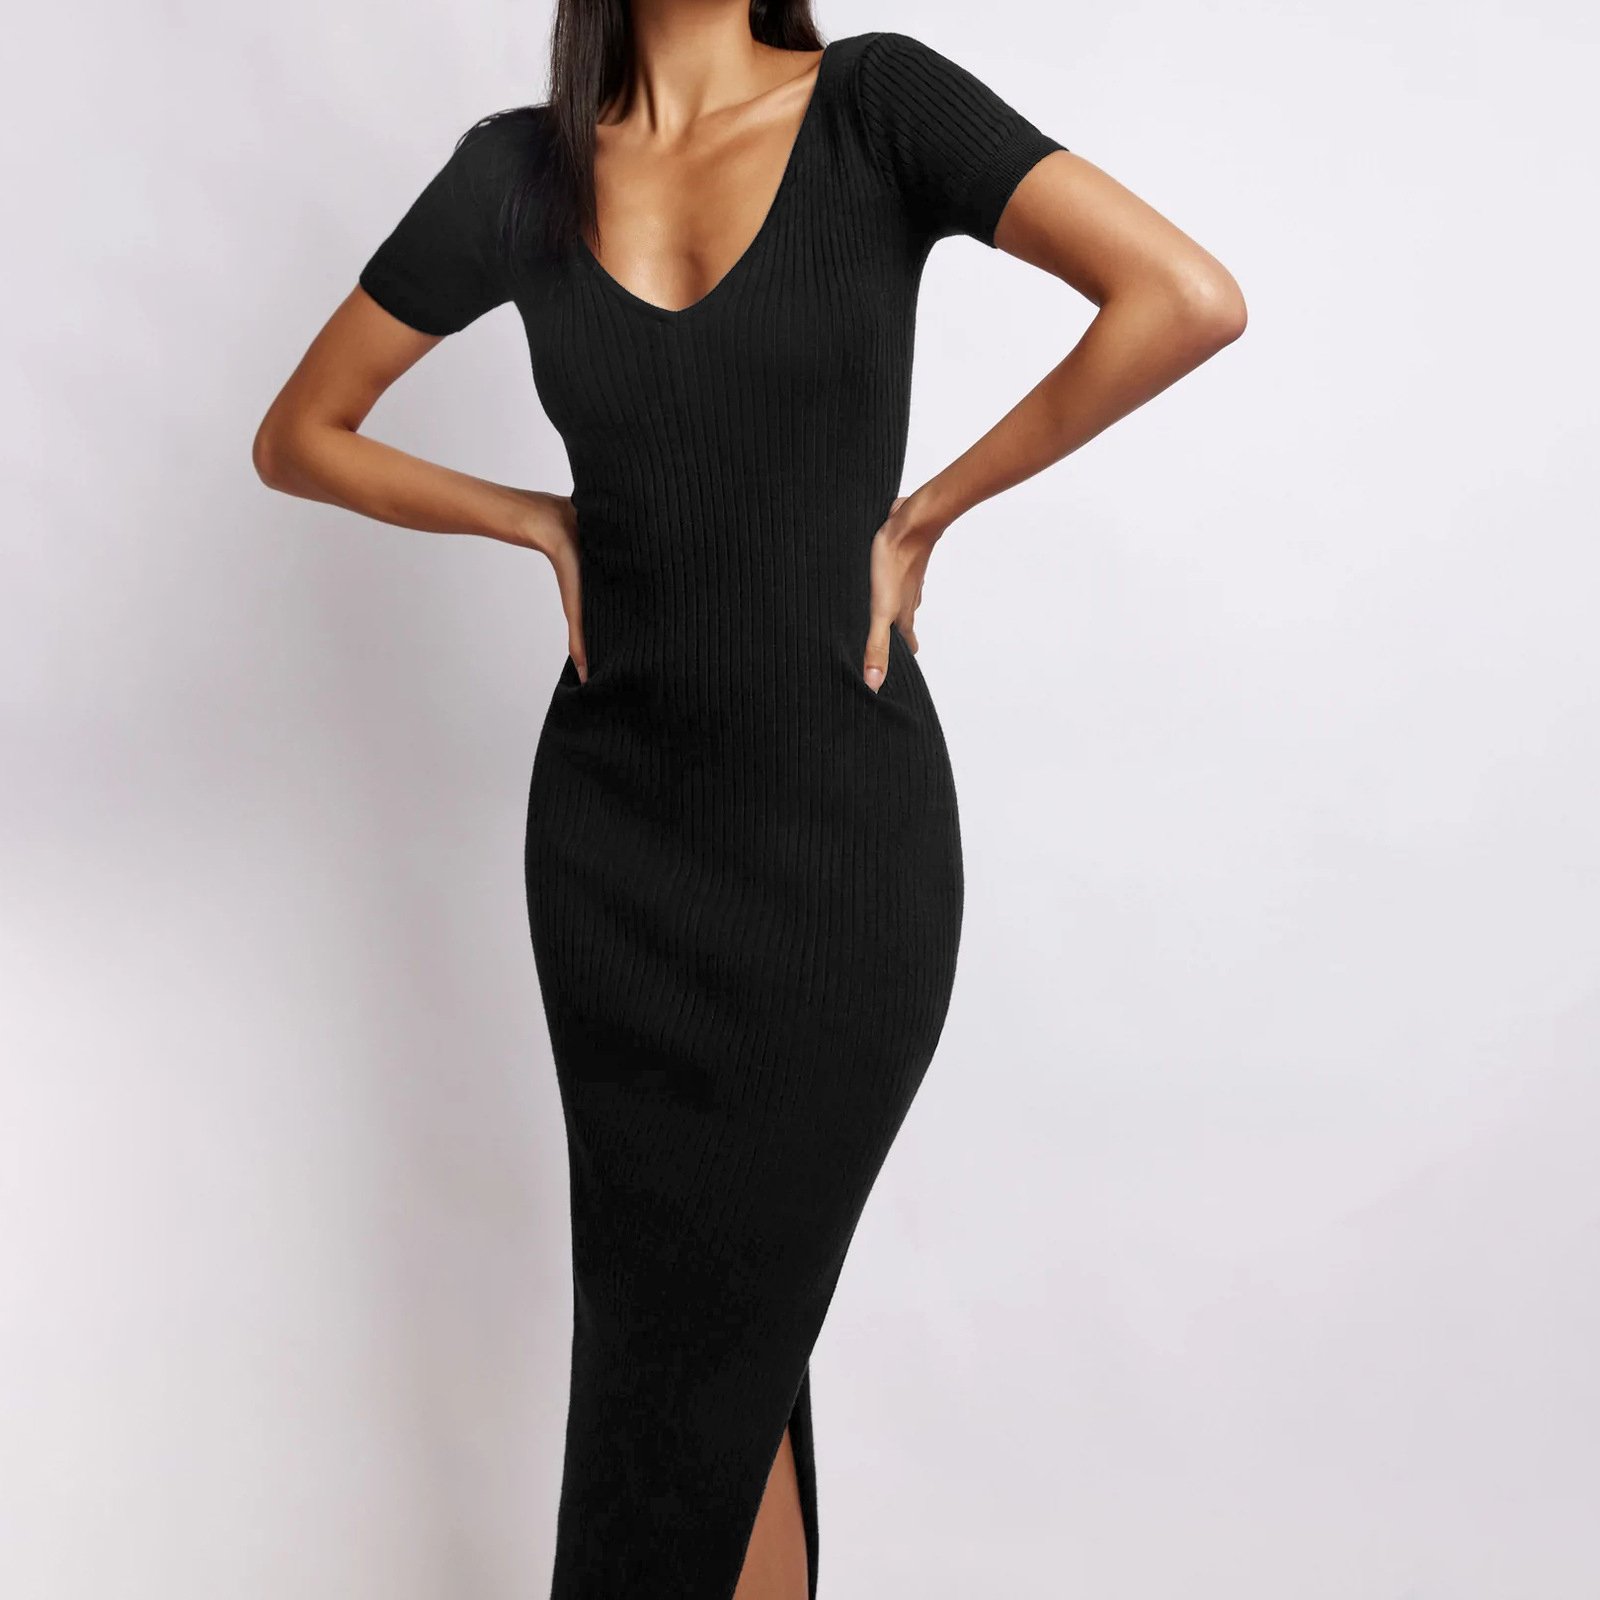 Sexy Women's V-neck Tight-fitting Split Skirt - Black, Medium